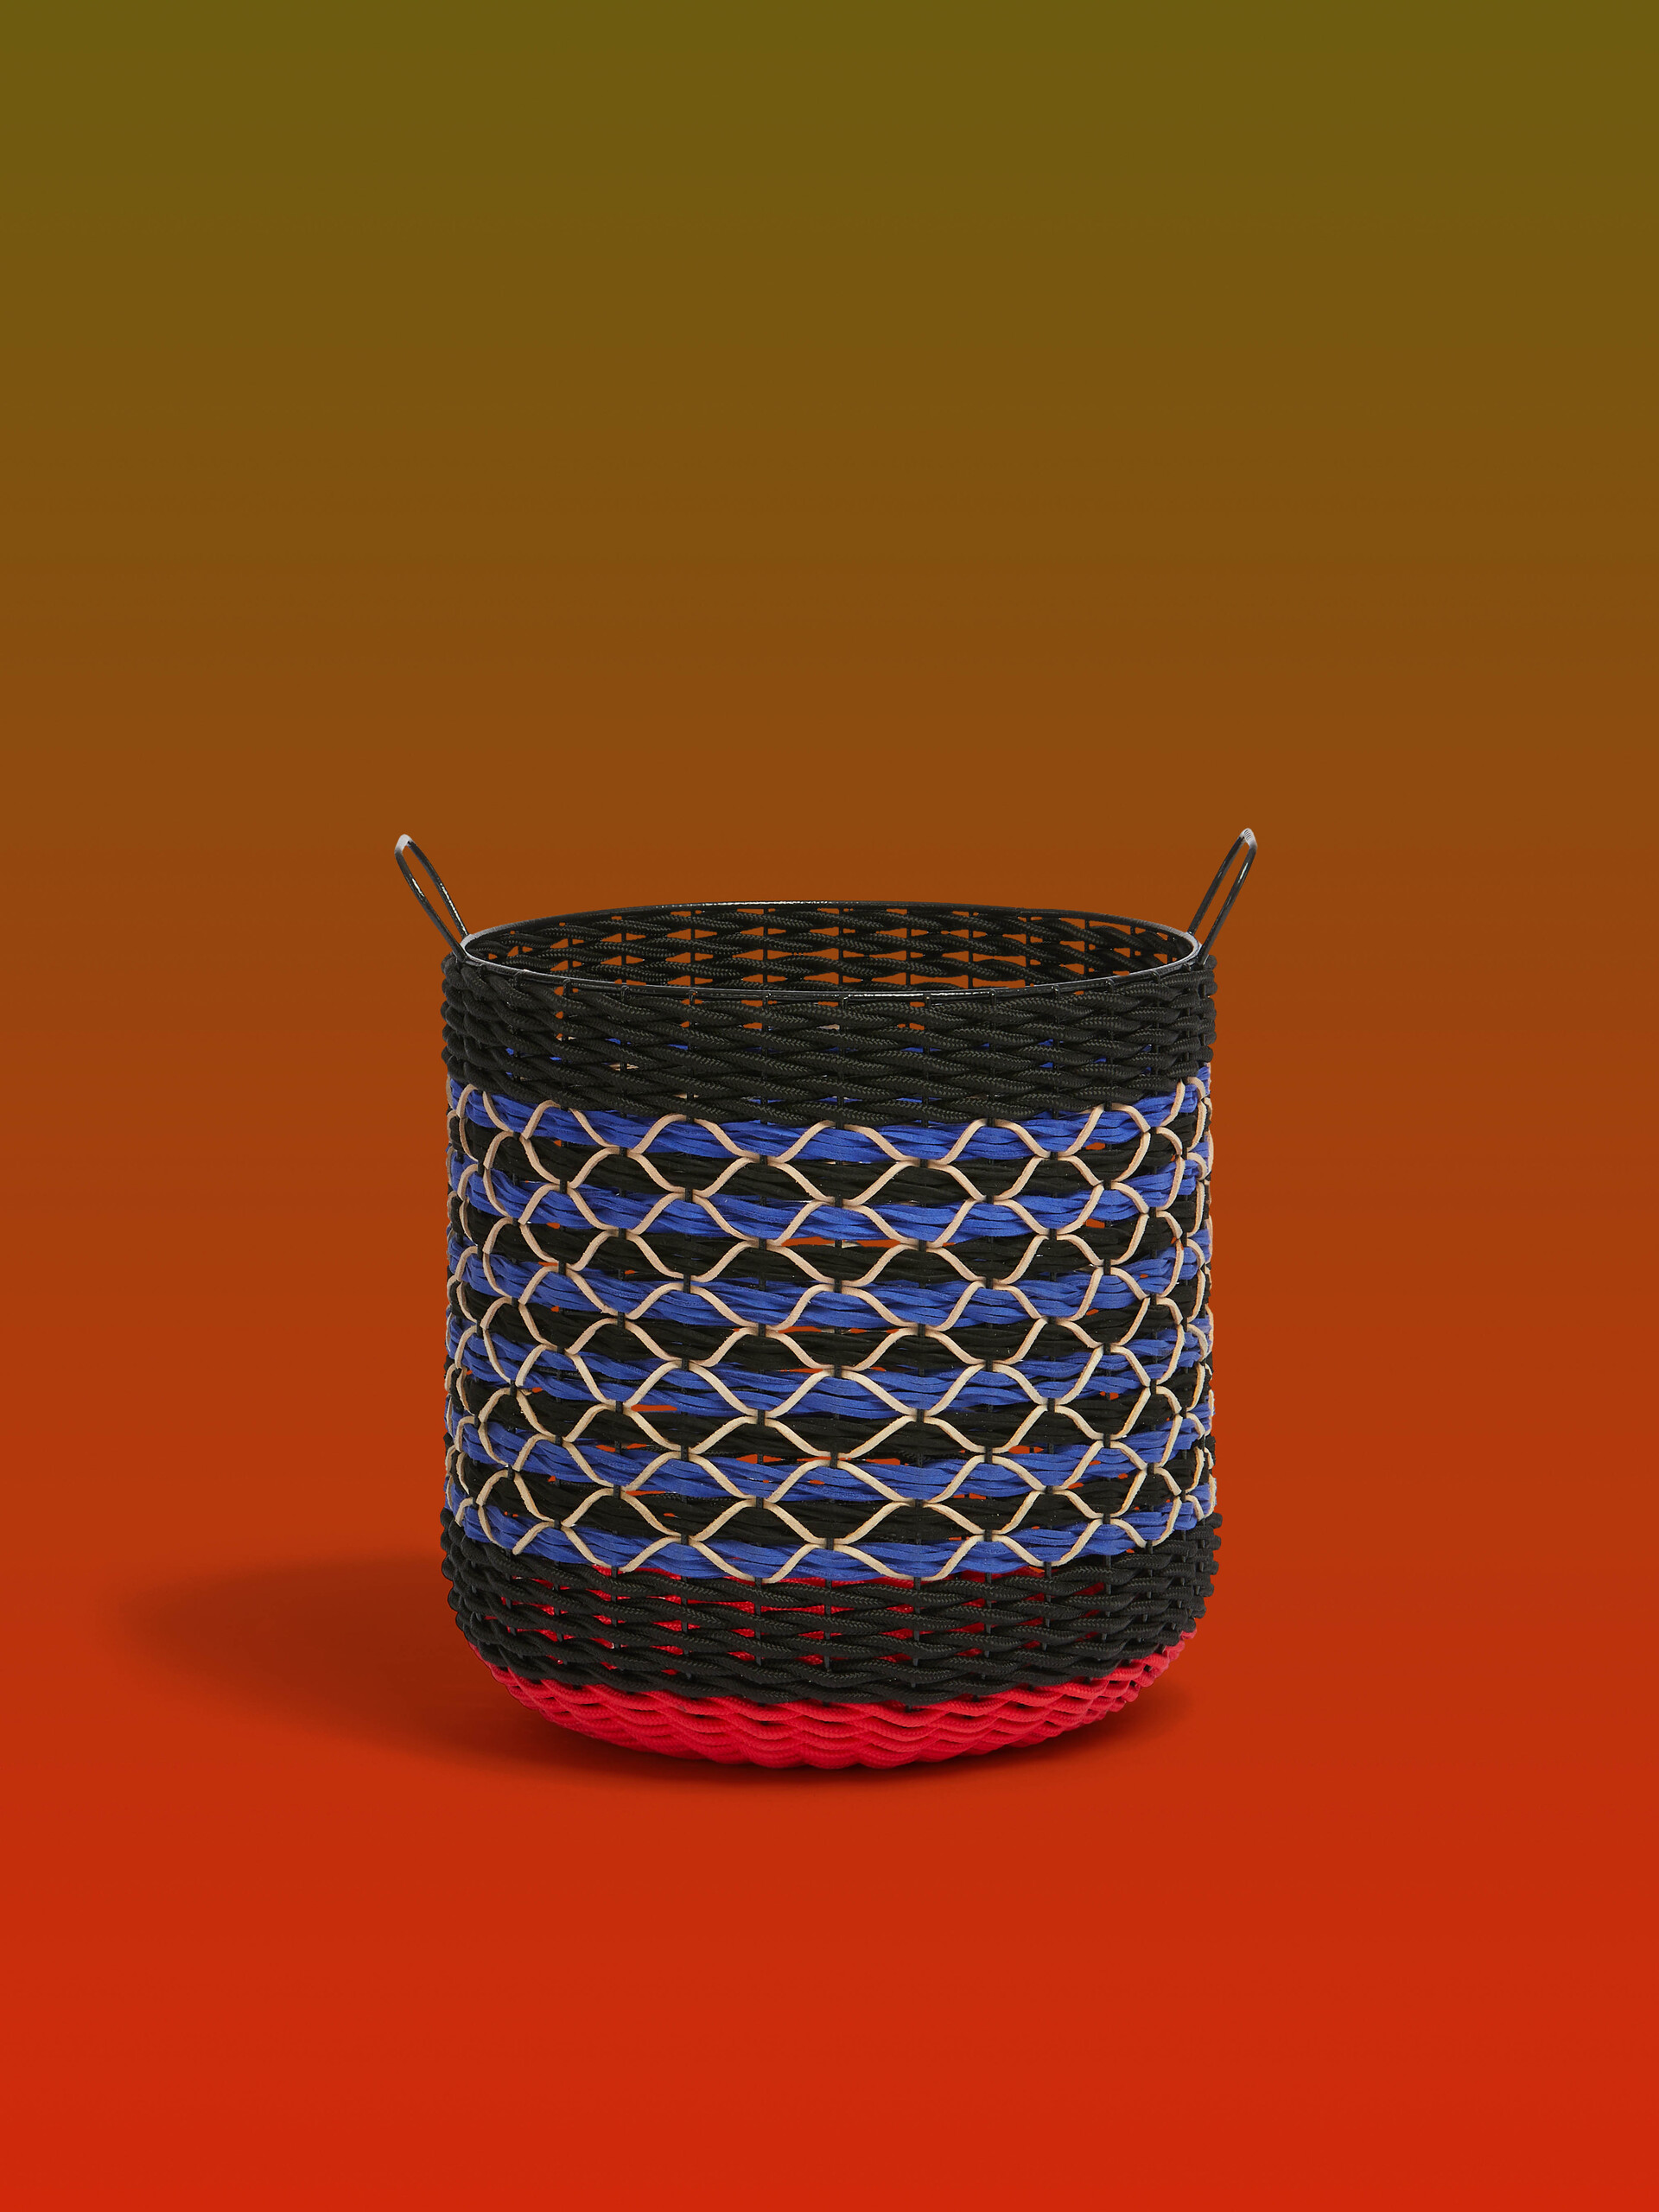 Blue and black Marni Market round storage basket - Furniture - Image 1